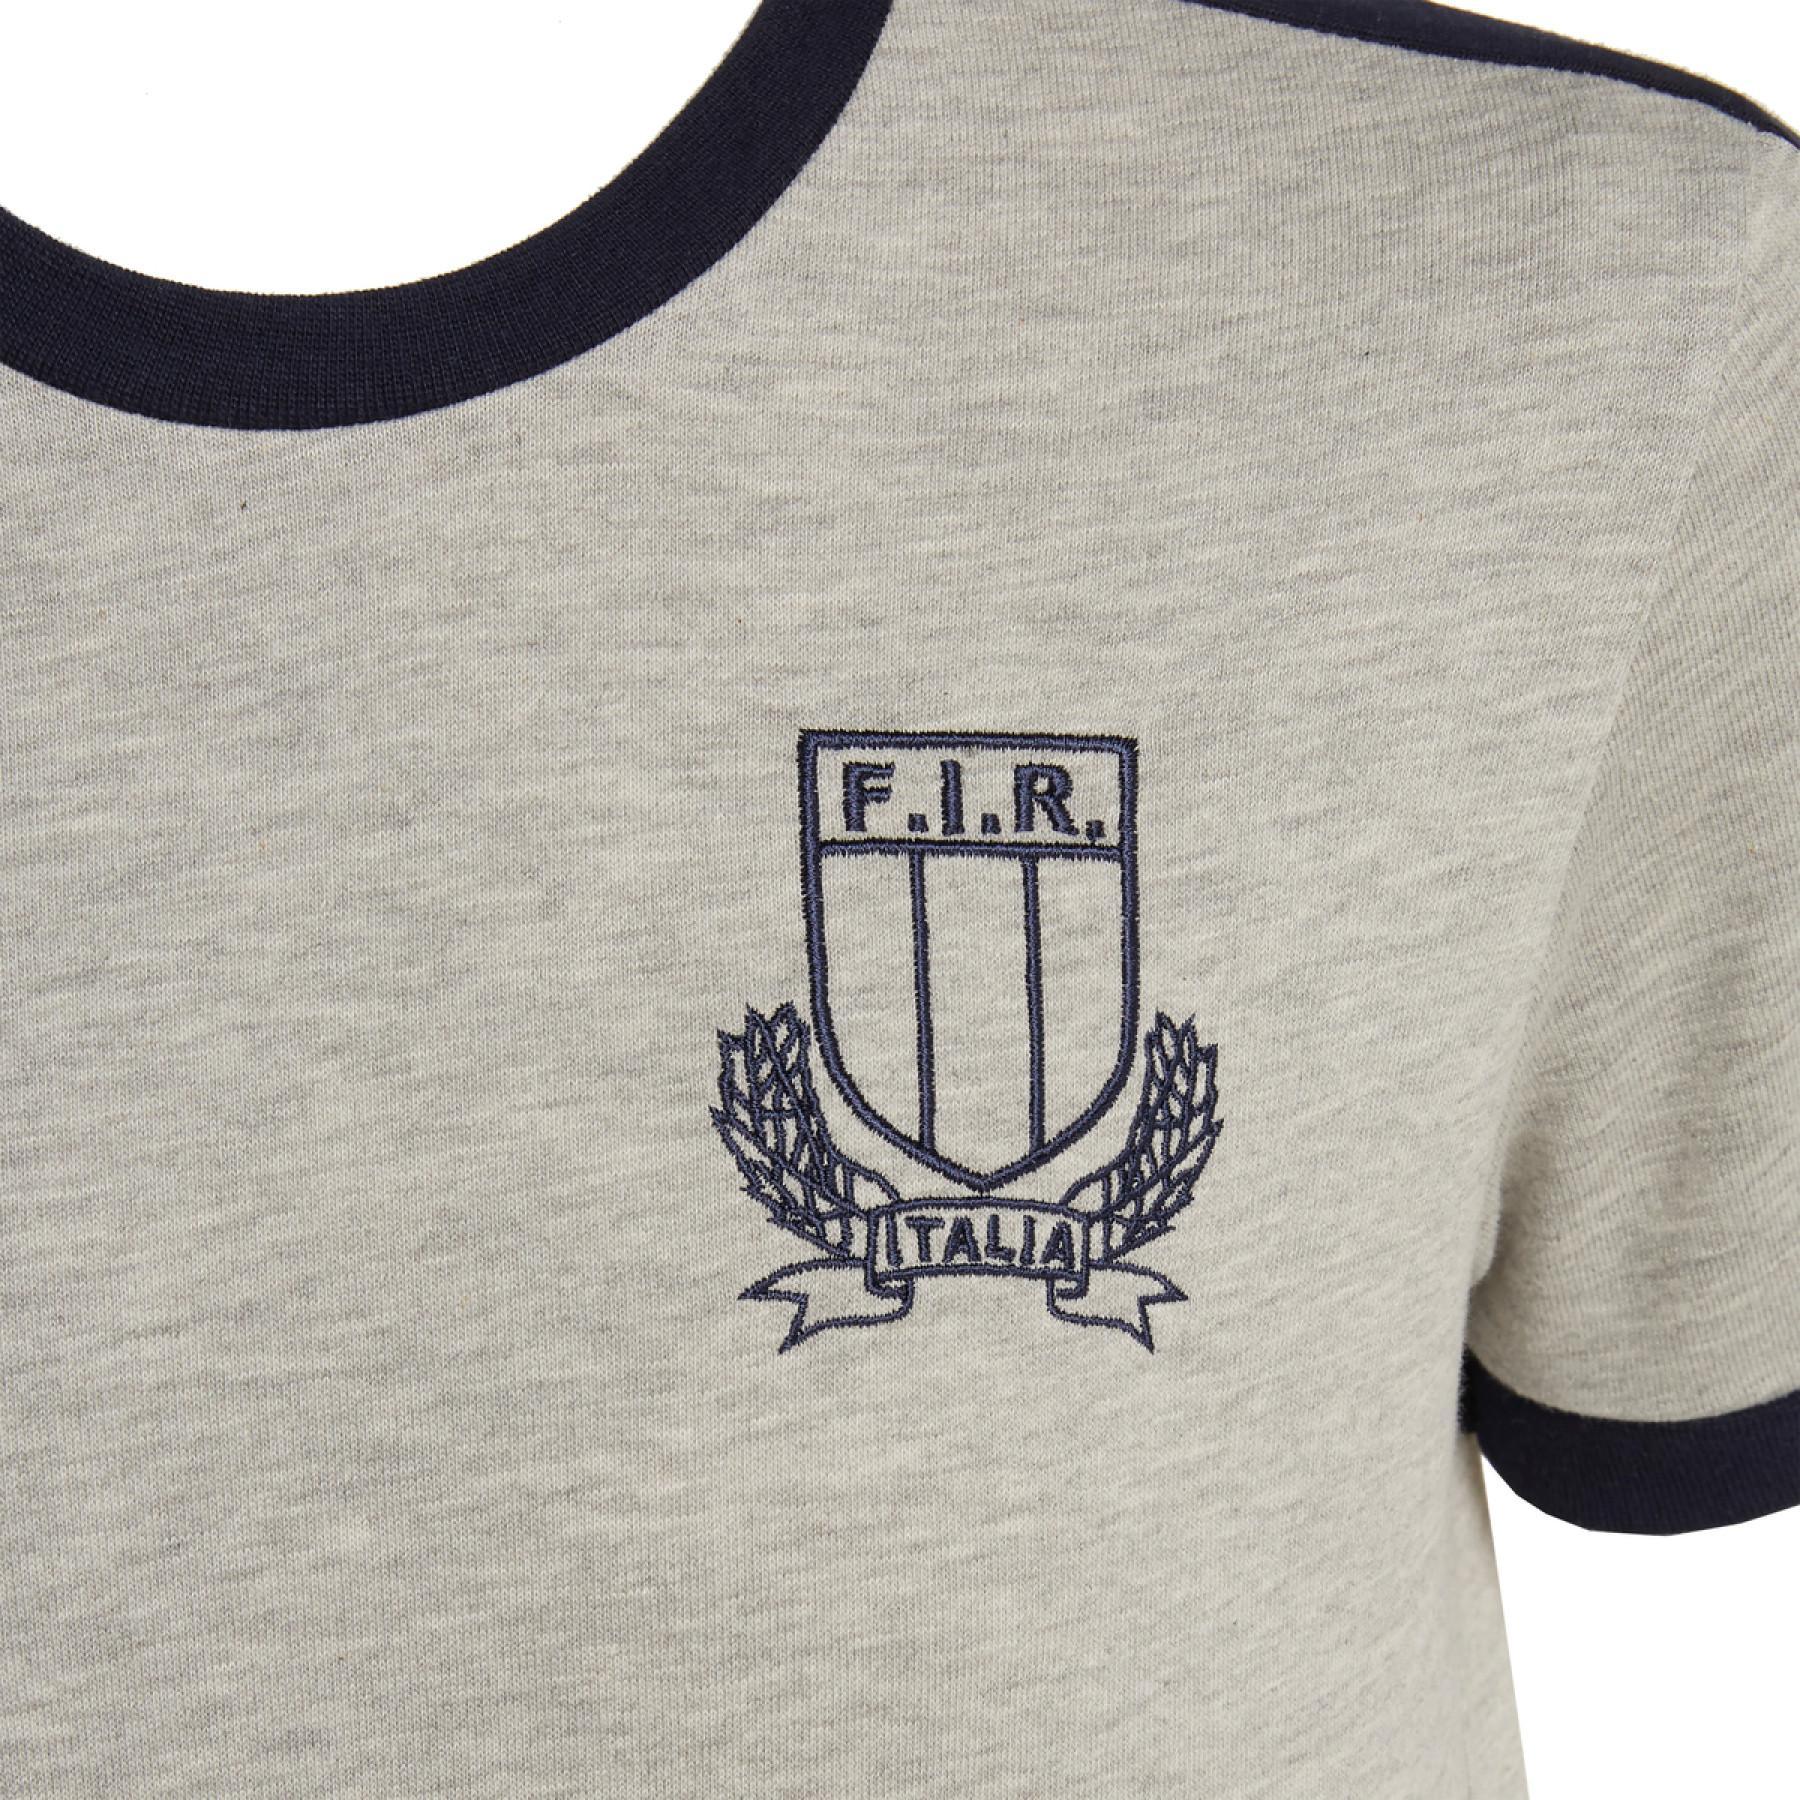 Camiseta de algodón para niños Italie rubgy 2019